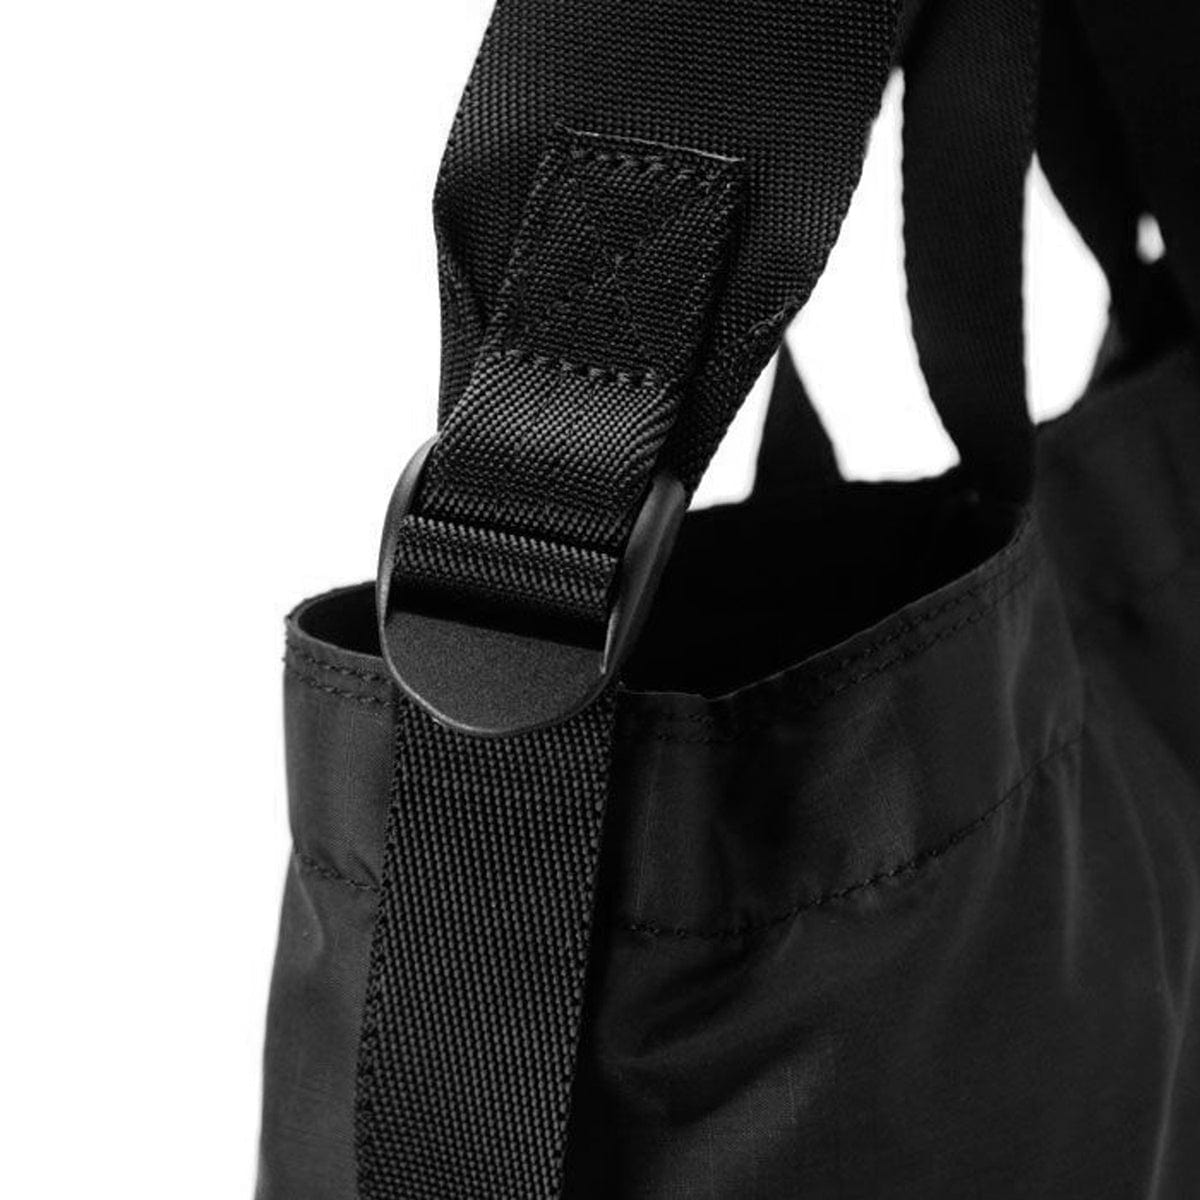 PORTER YOSHIDA & CO Bags BLACK / O/S FLEX 2WAY SHOULDER BAG